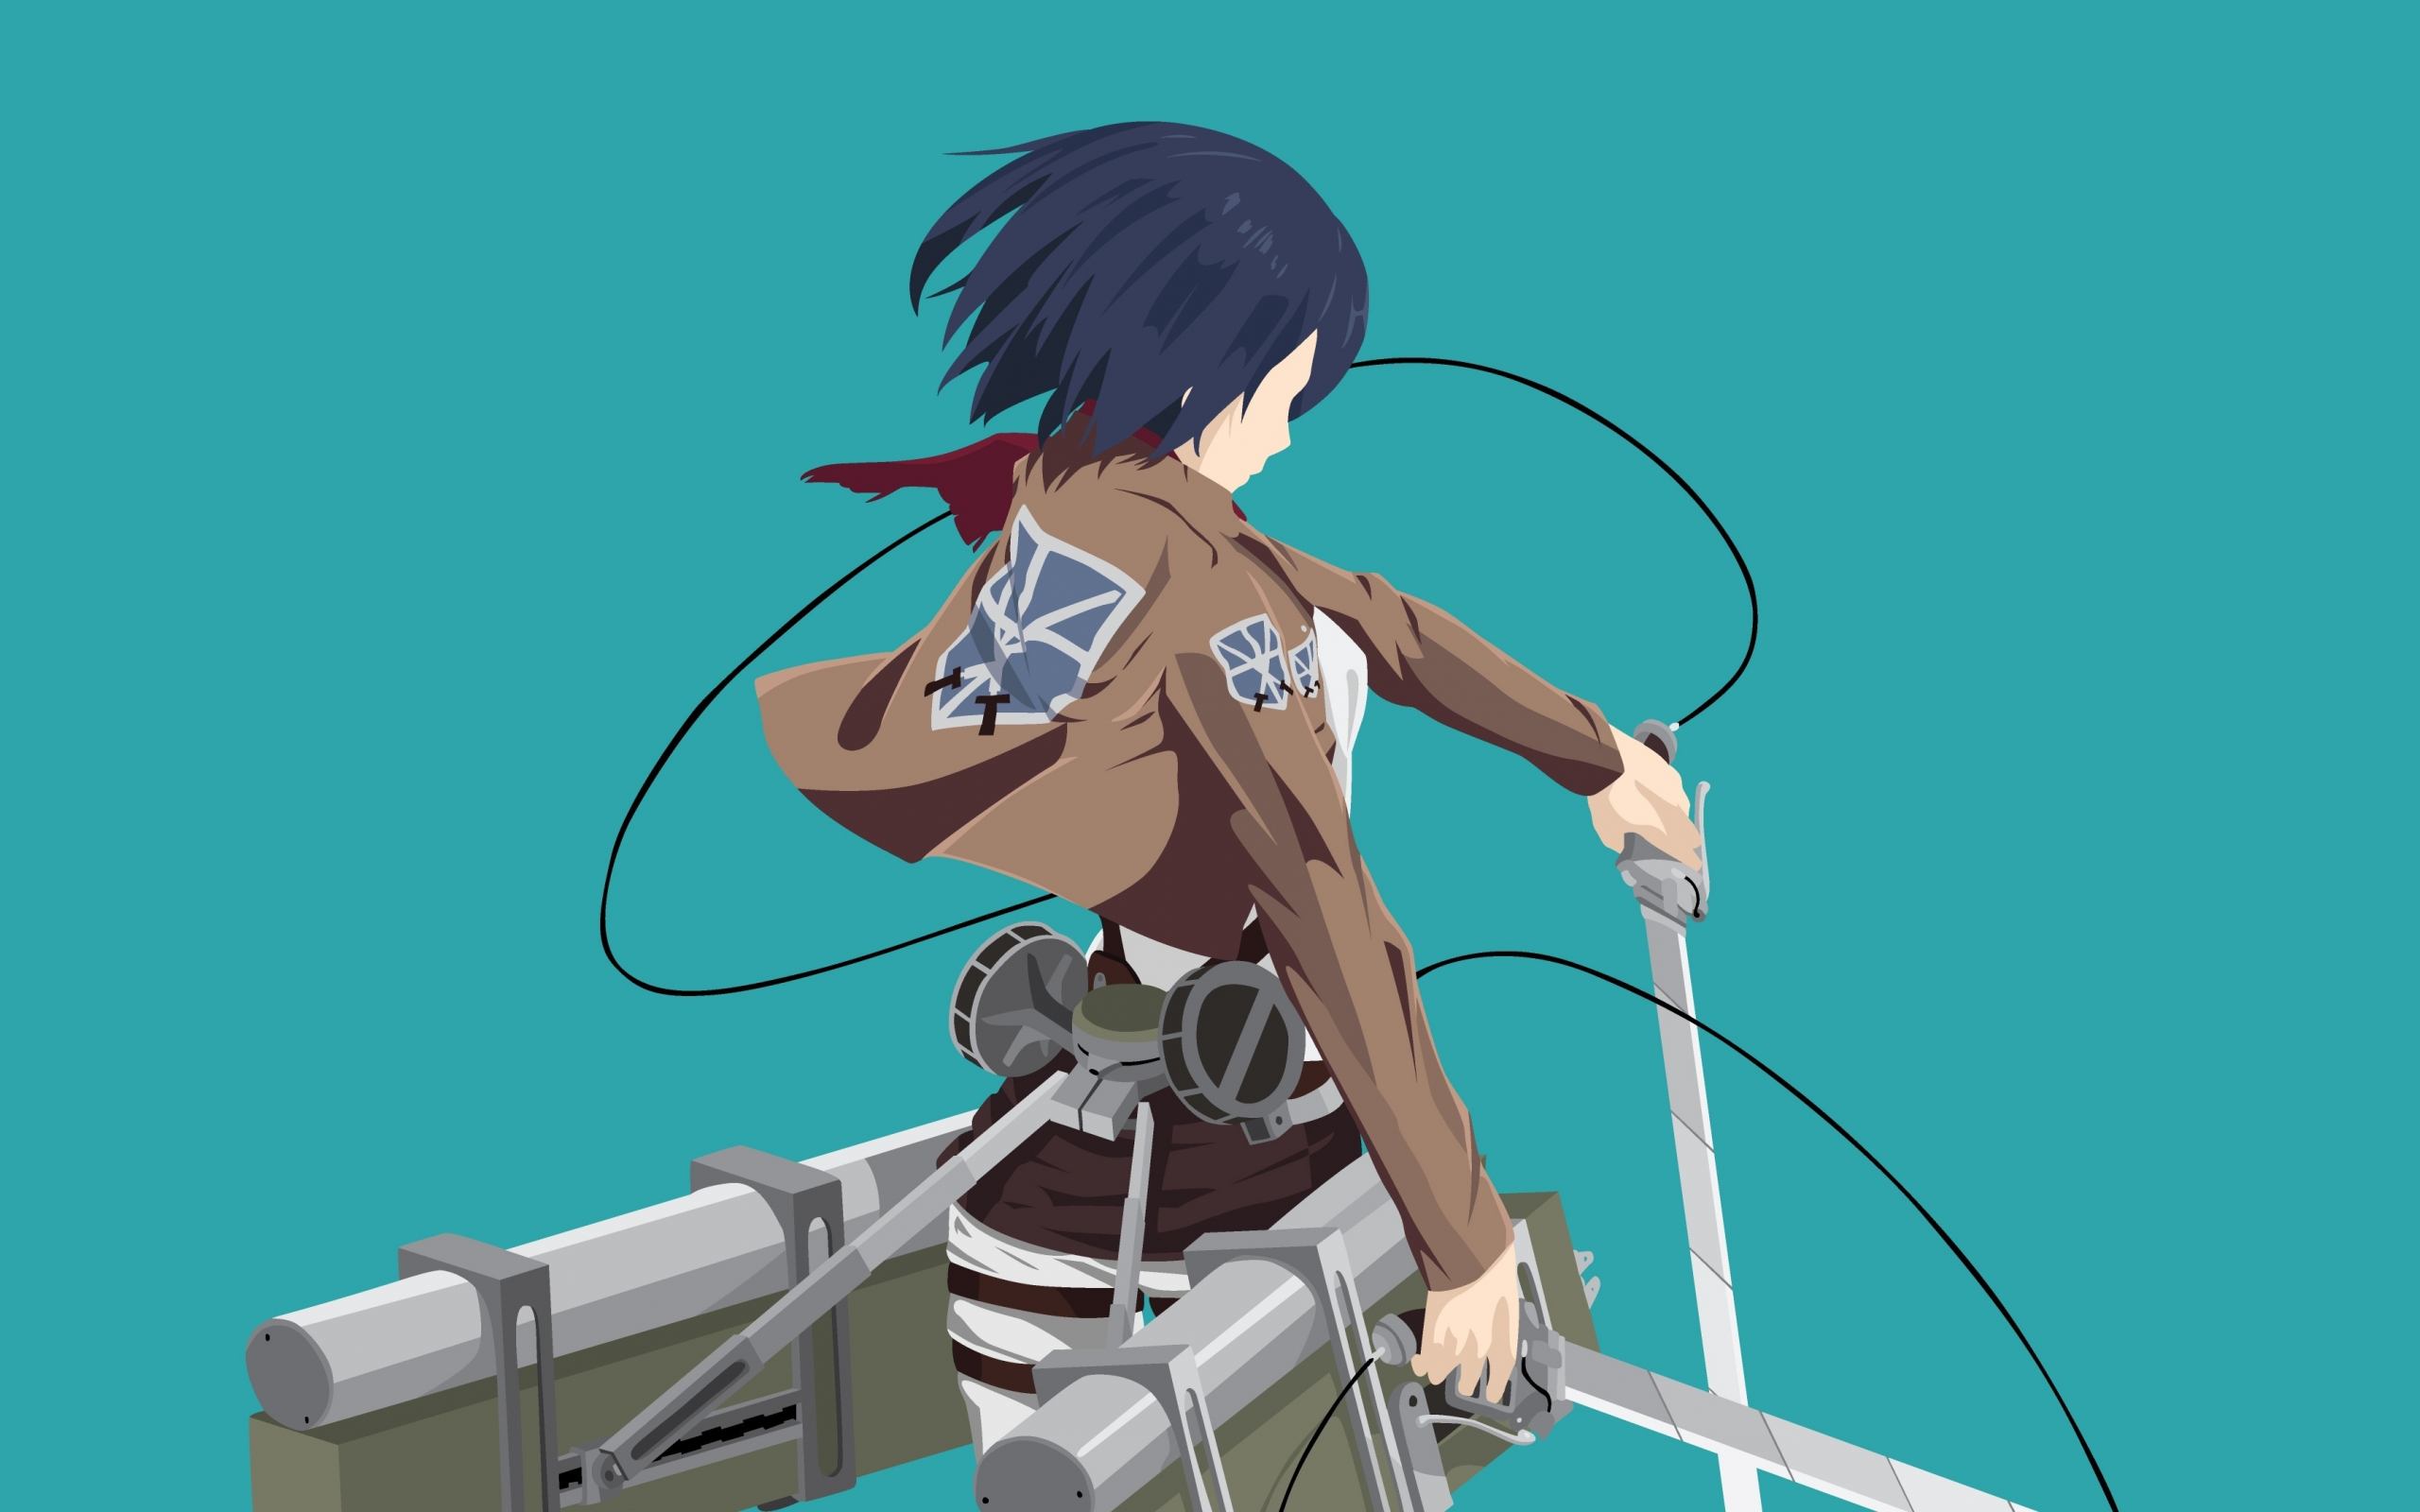 Download Anime Girl Mikasa Ackerman Minimal 2560x1600 Wallpaper Dual Wide 16 10 2560x1600 Hd Image Background 4075